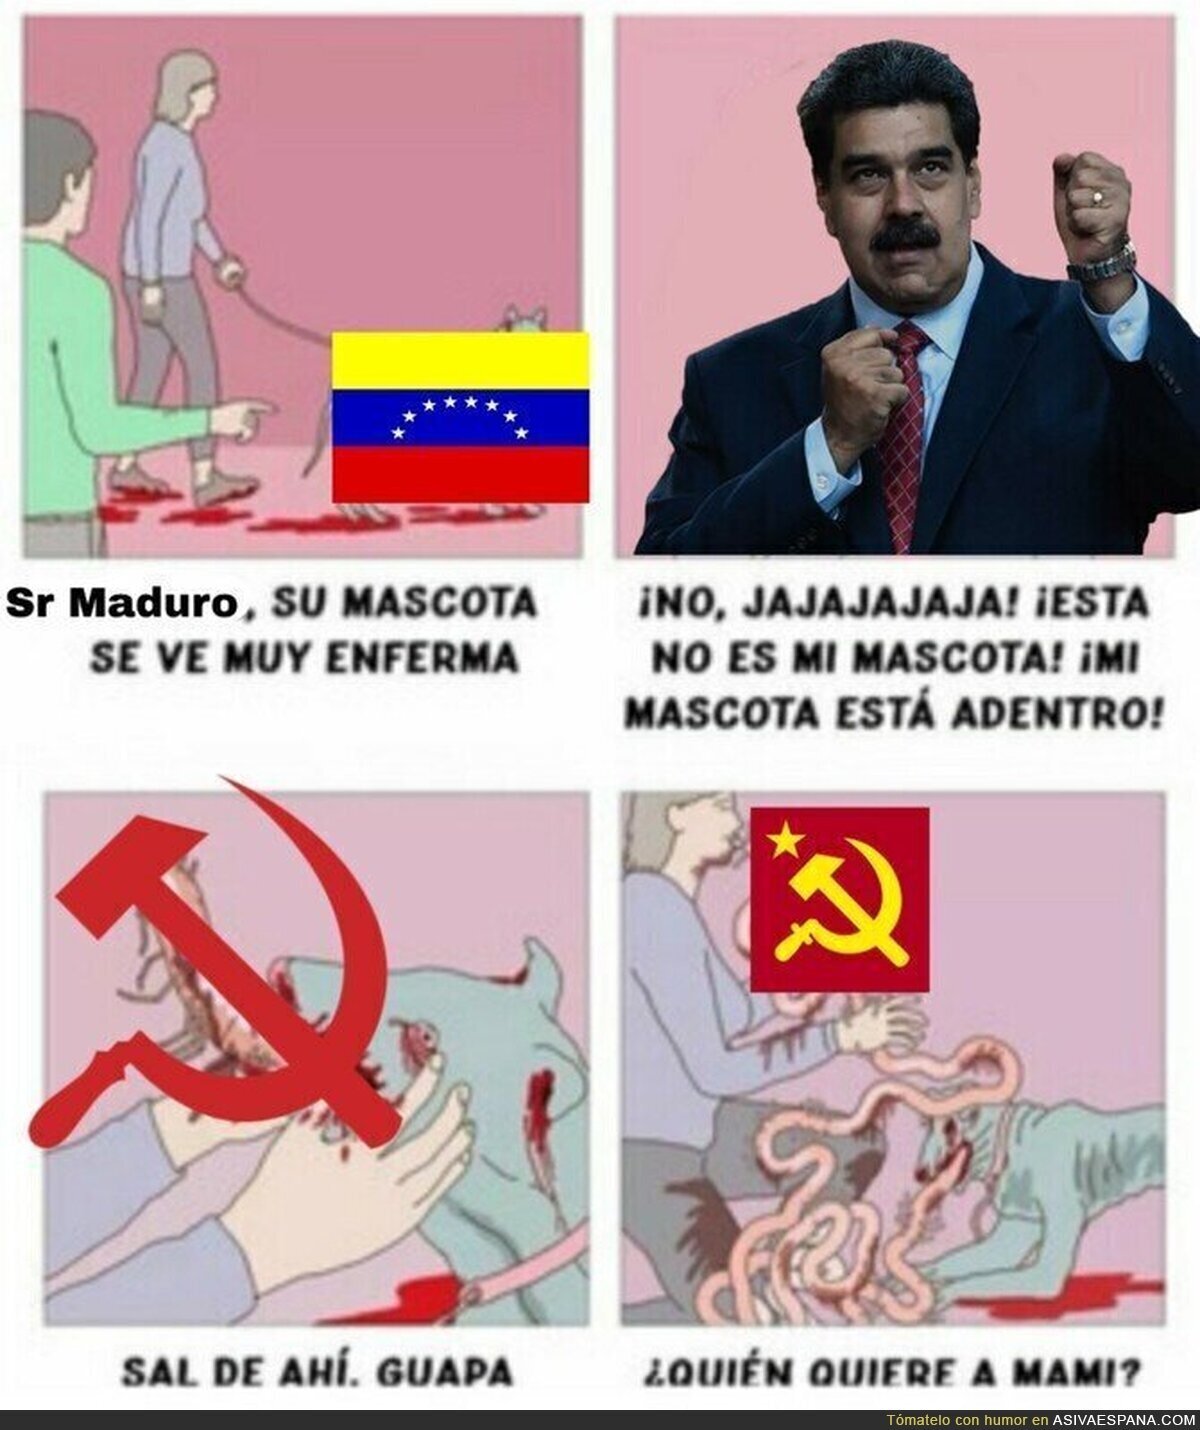 La mascota de Maduro